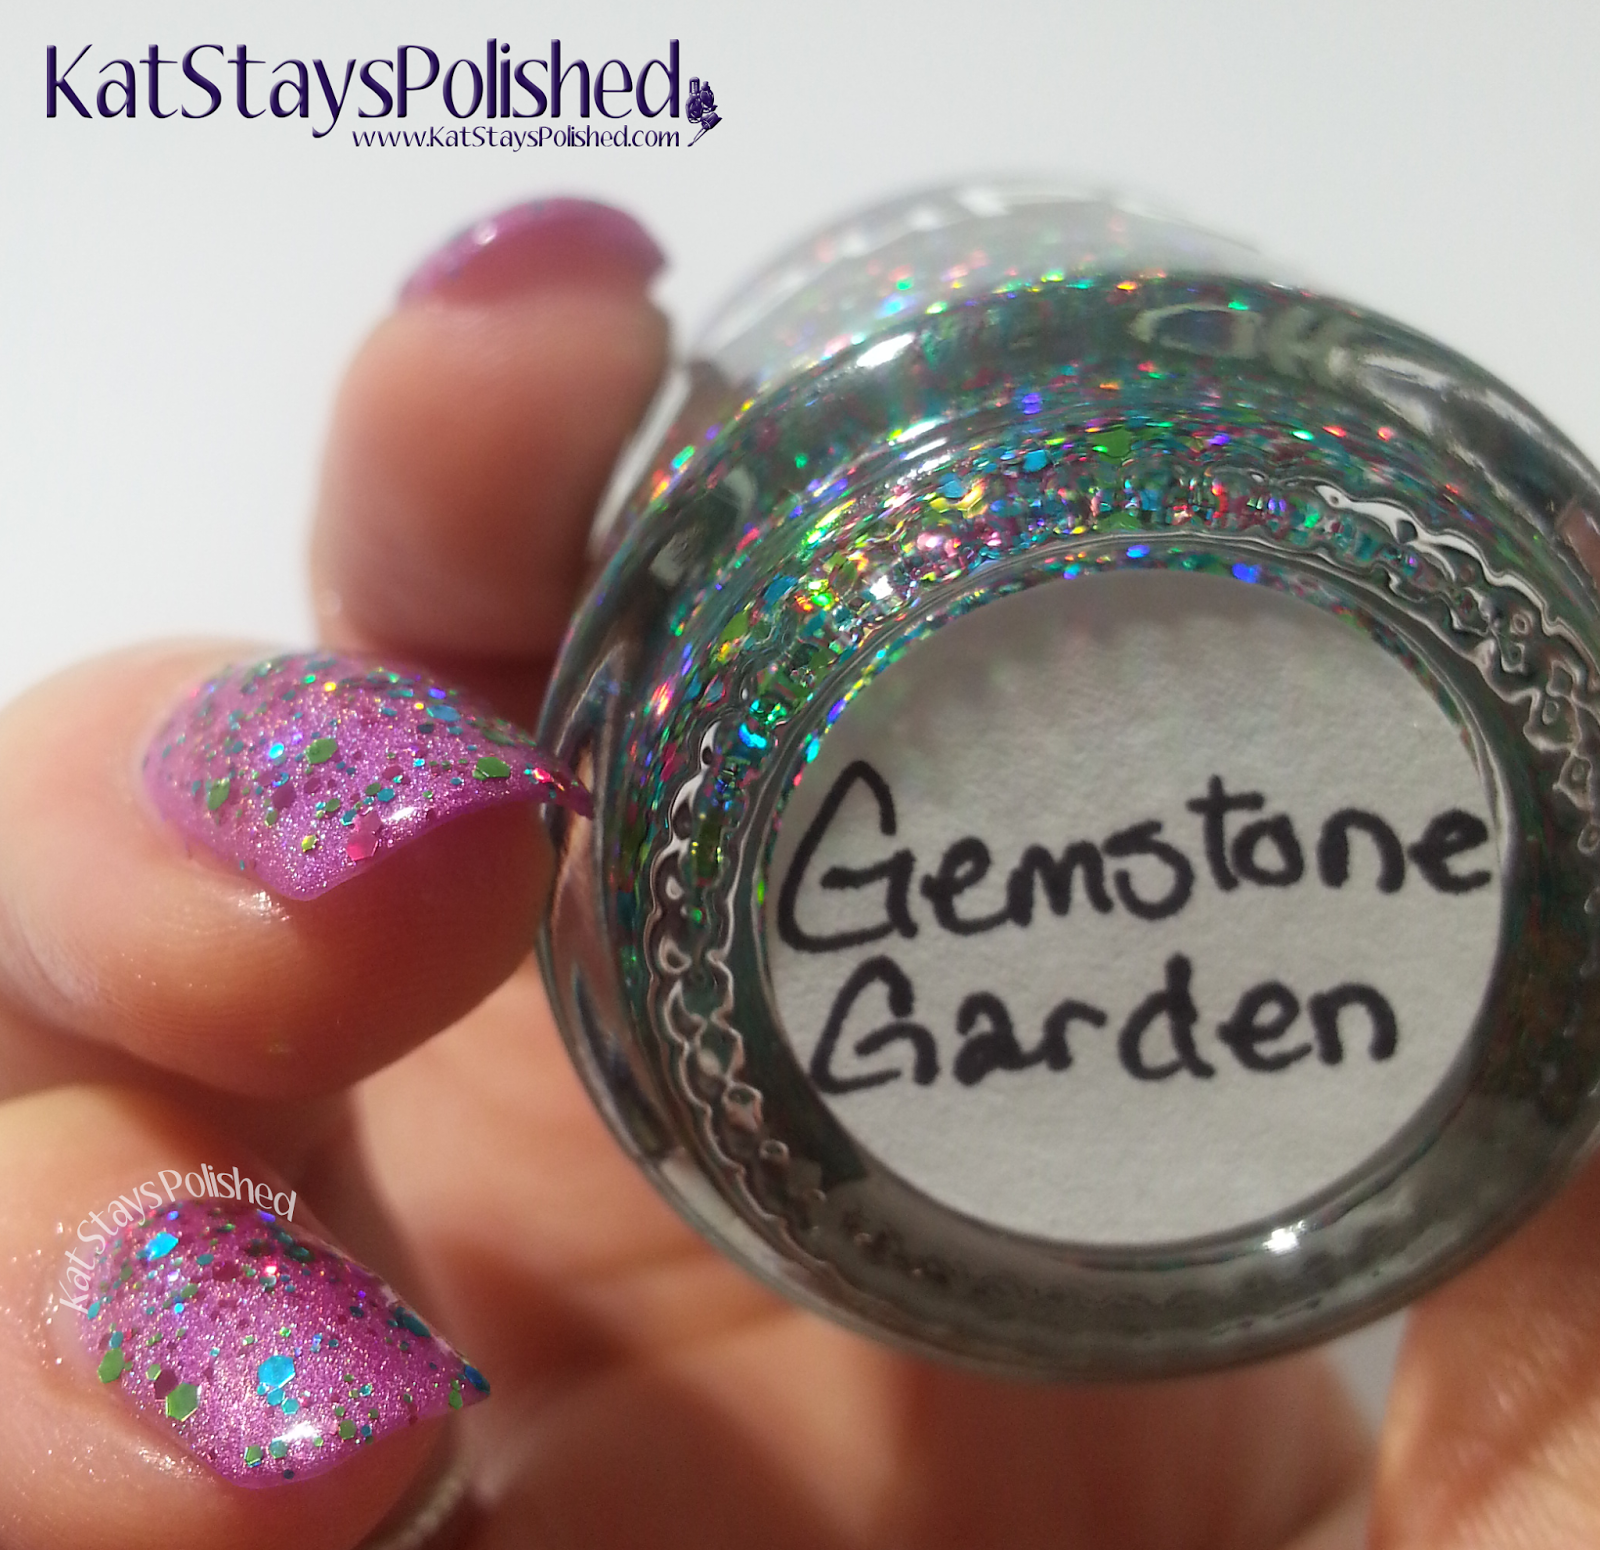 You Polish - Gemstone Garden | Kat Stays Polished